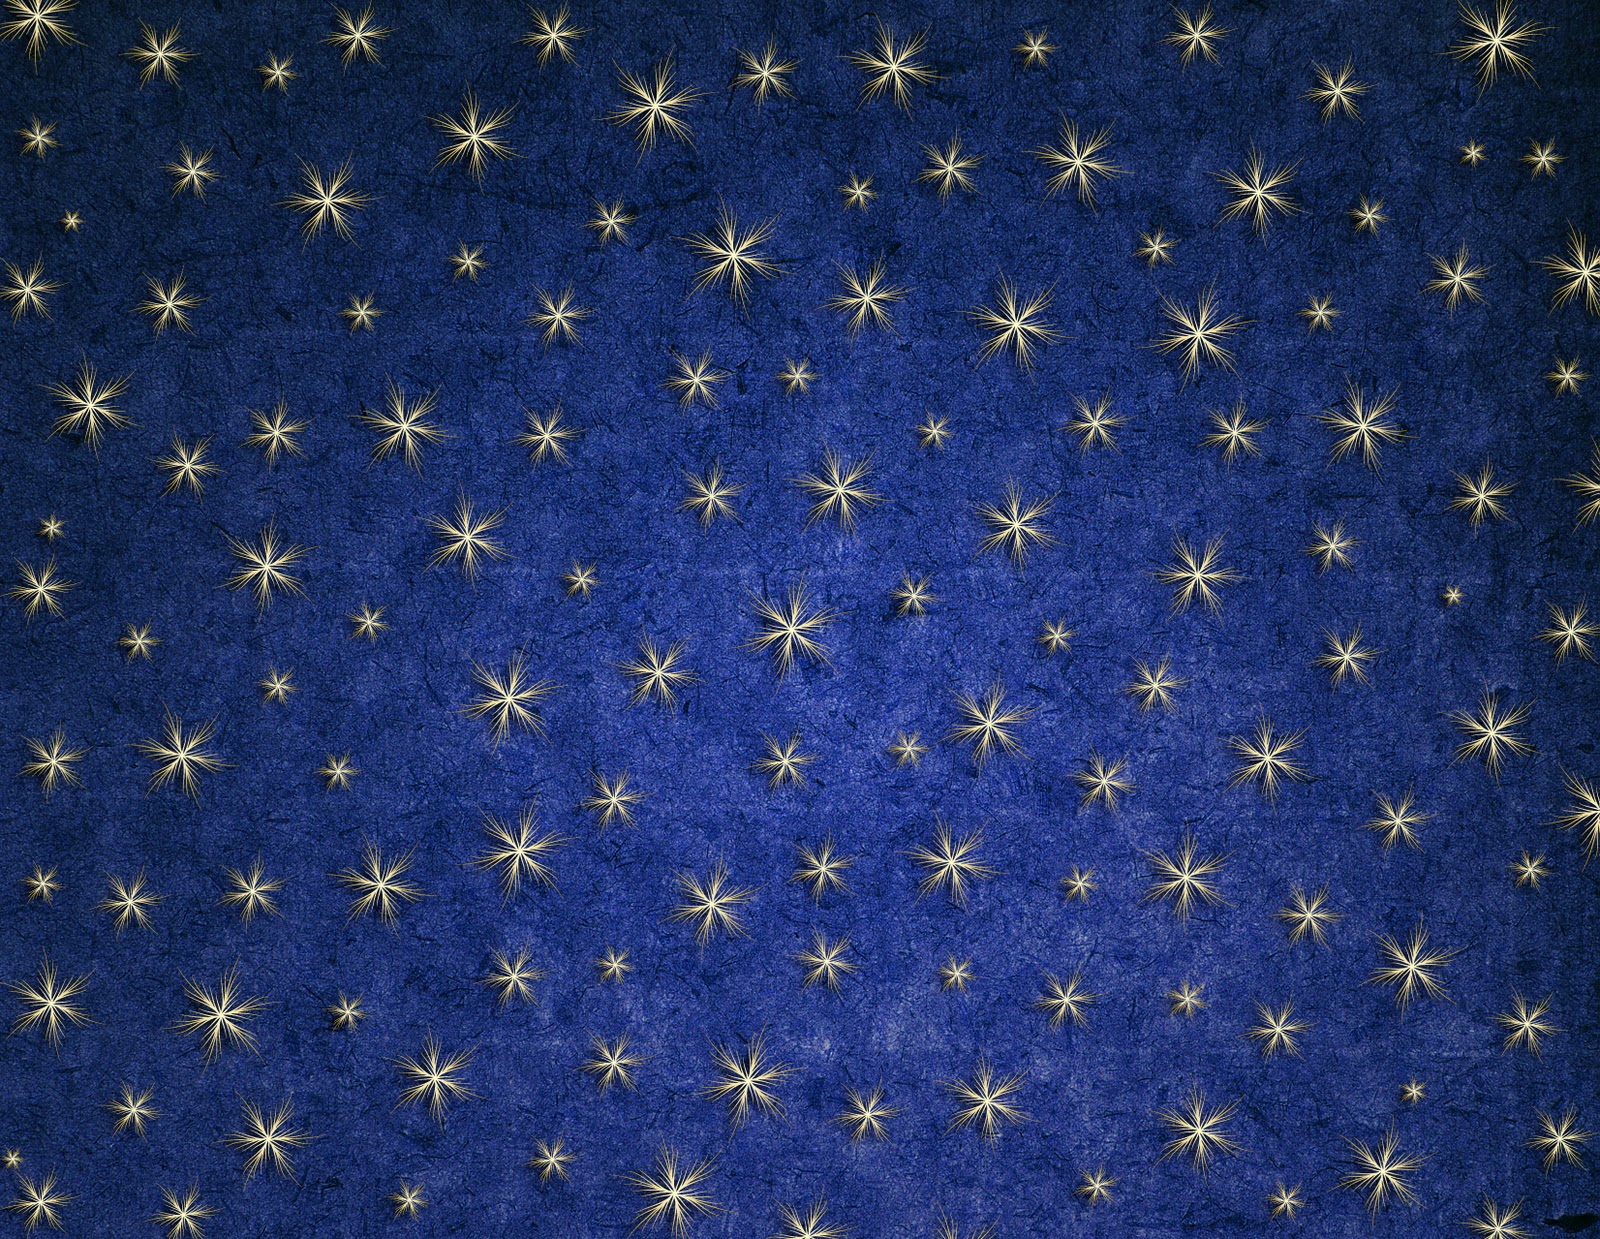 По темному небу золотым узором звезд. Ткань с золотыми звездами. Синий фон со звездами. Синяя ткань с золотыми звездами. Ткань со звездочками.